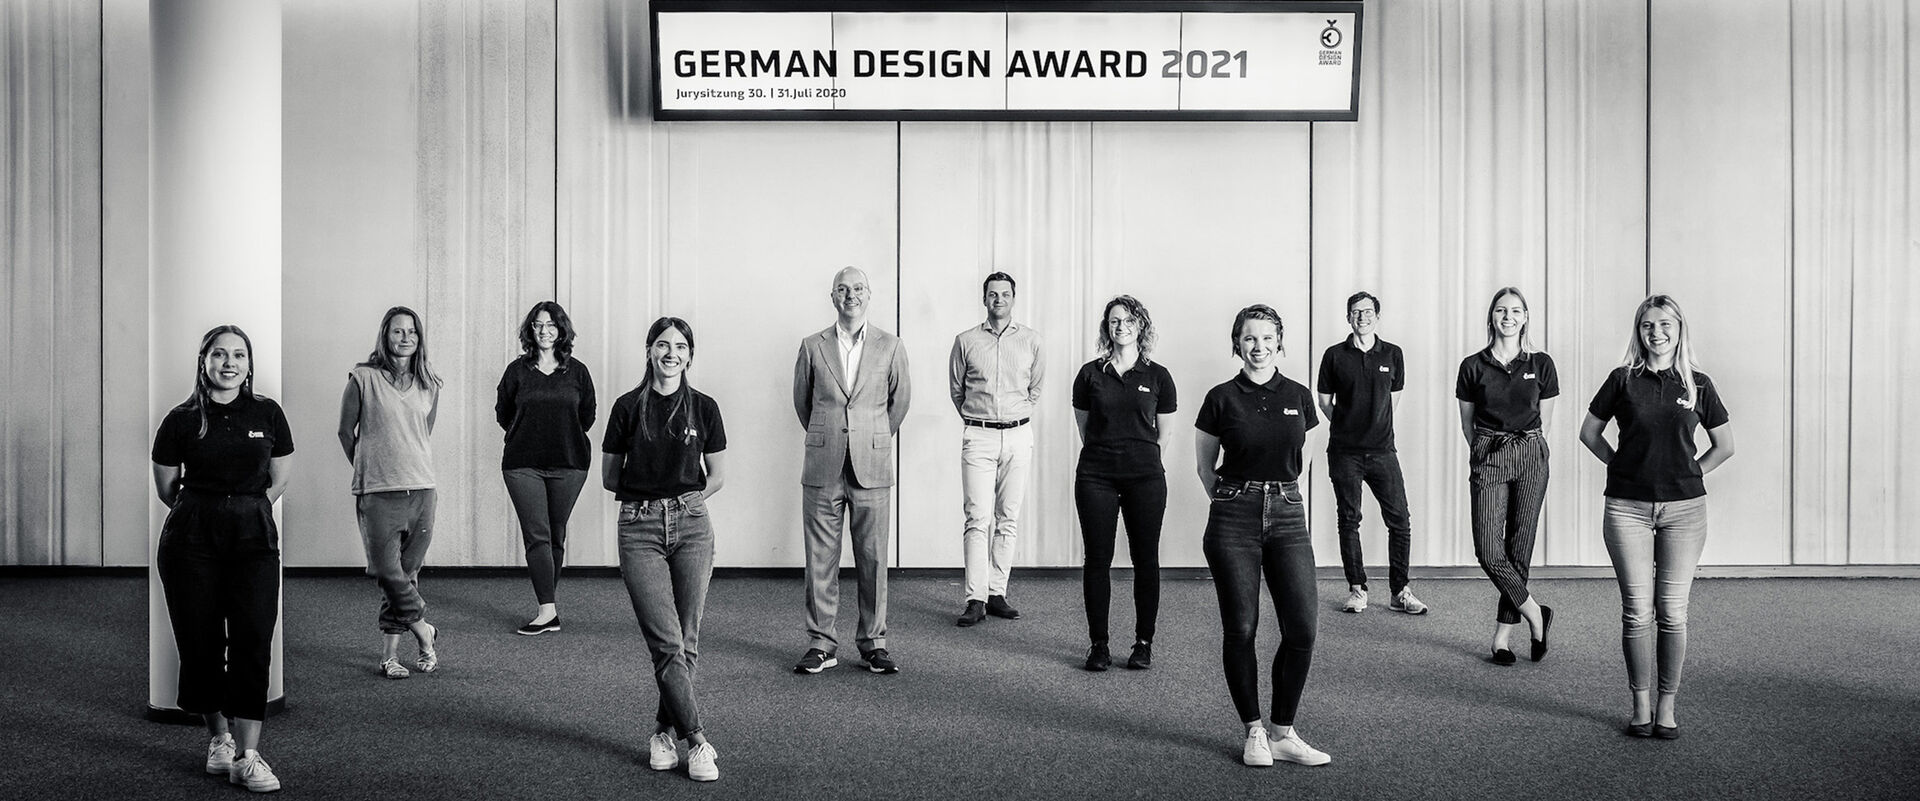 Design Awards 2021 Bath Badezimmer Head